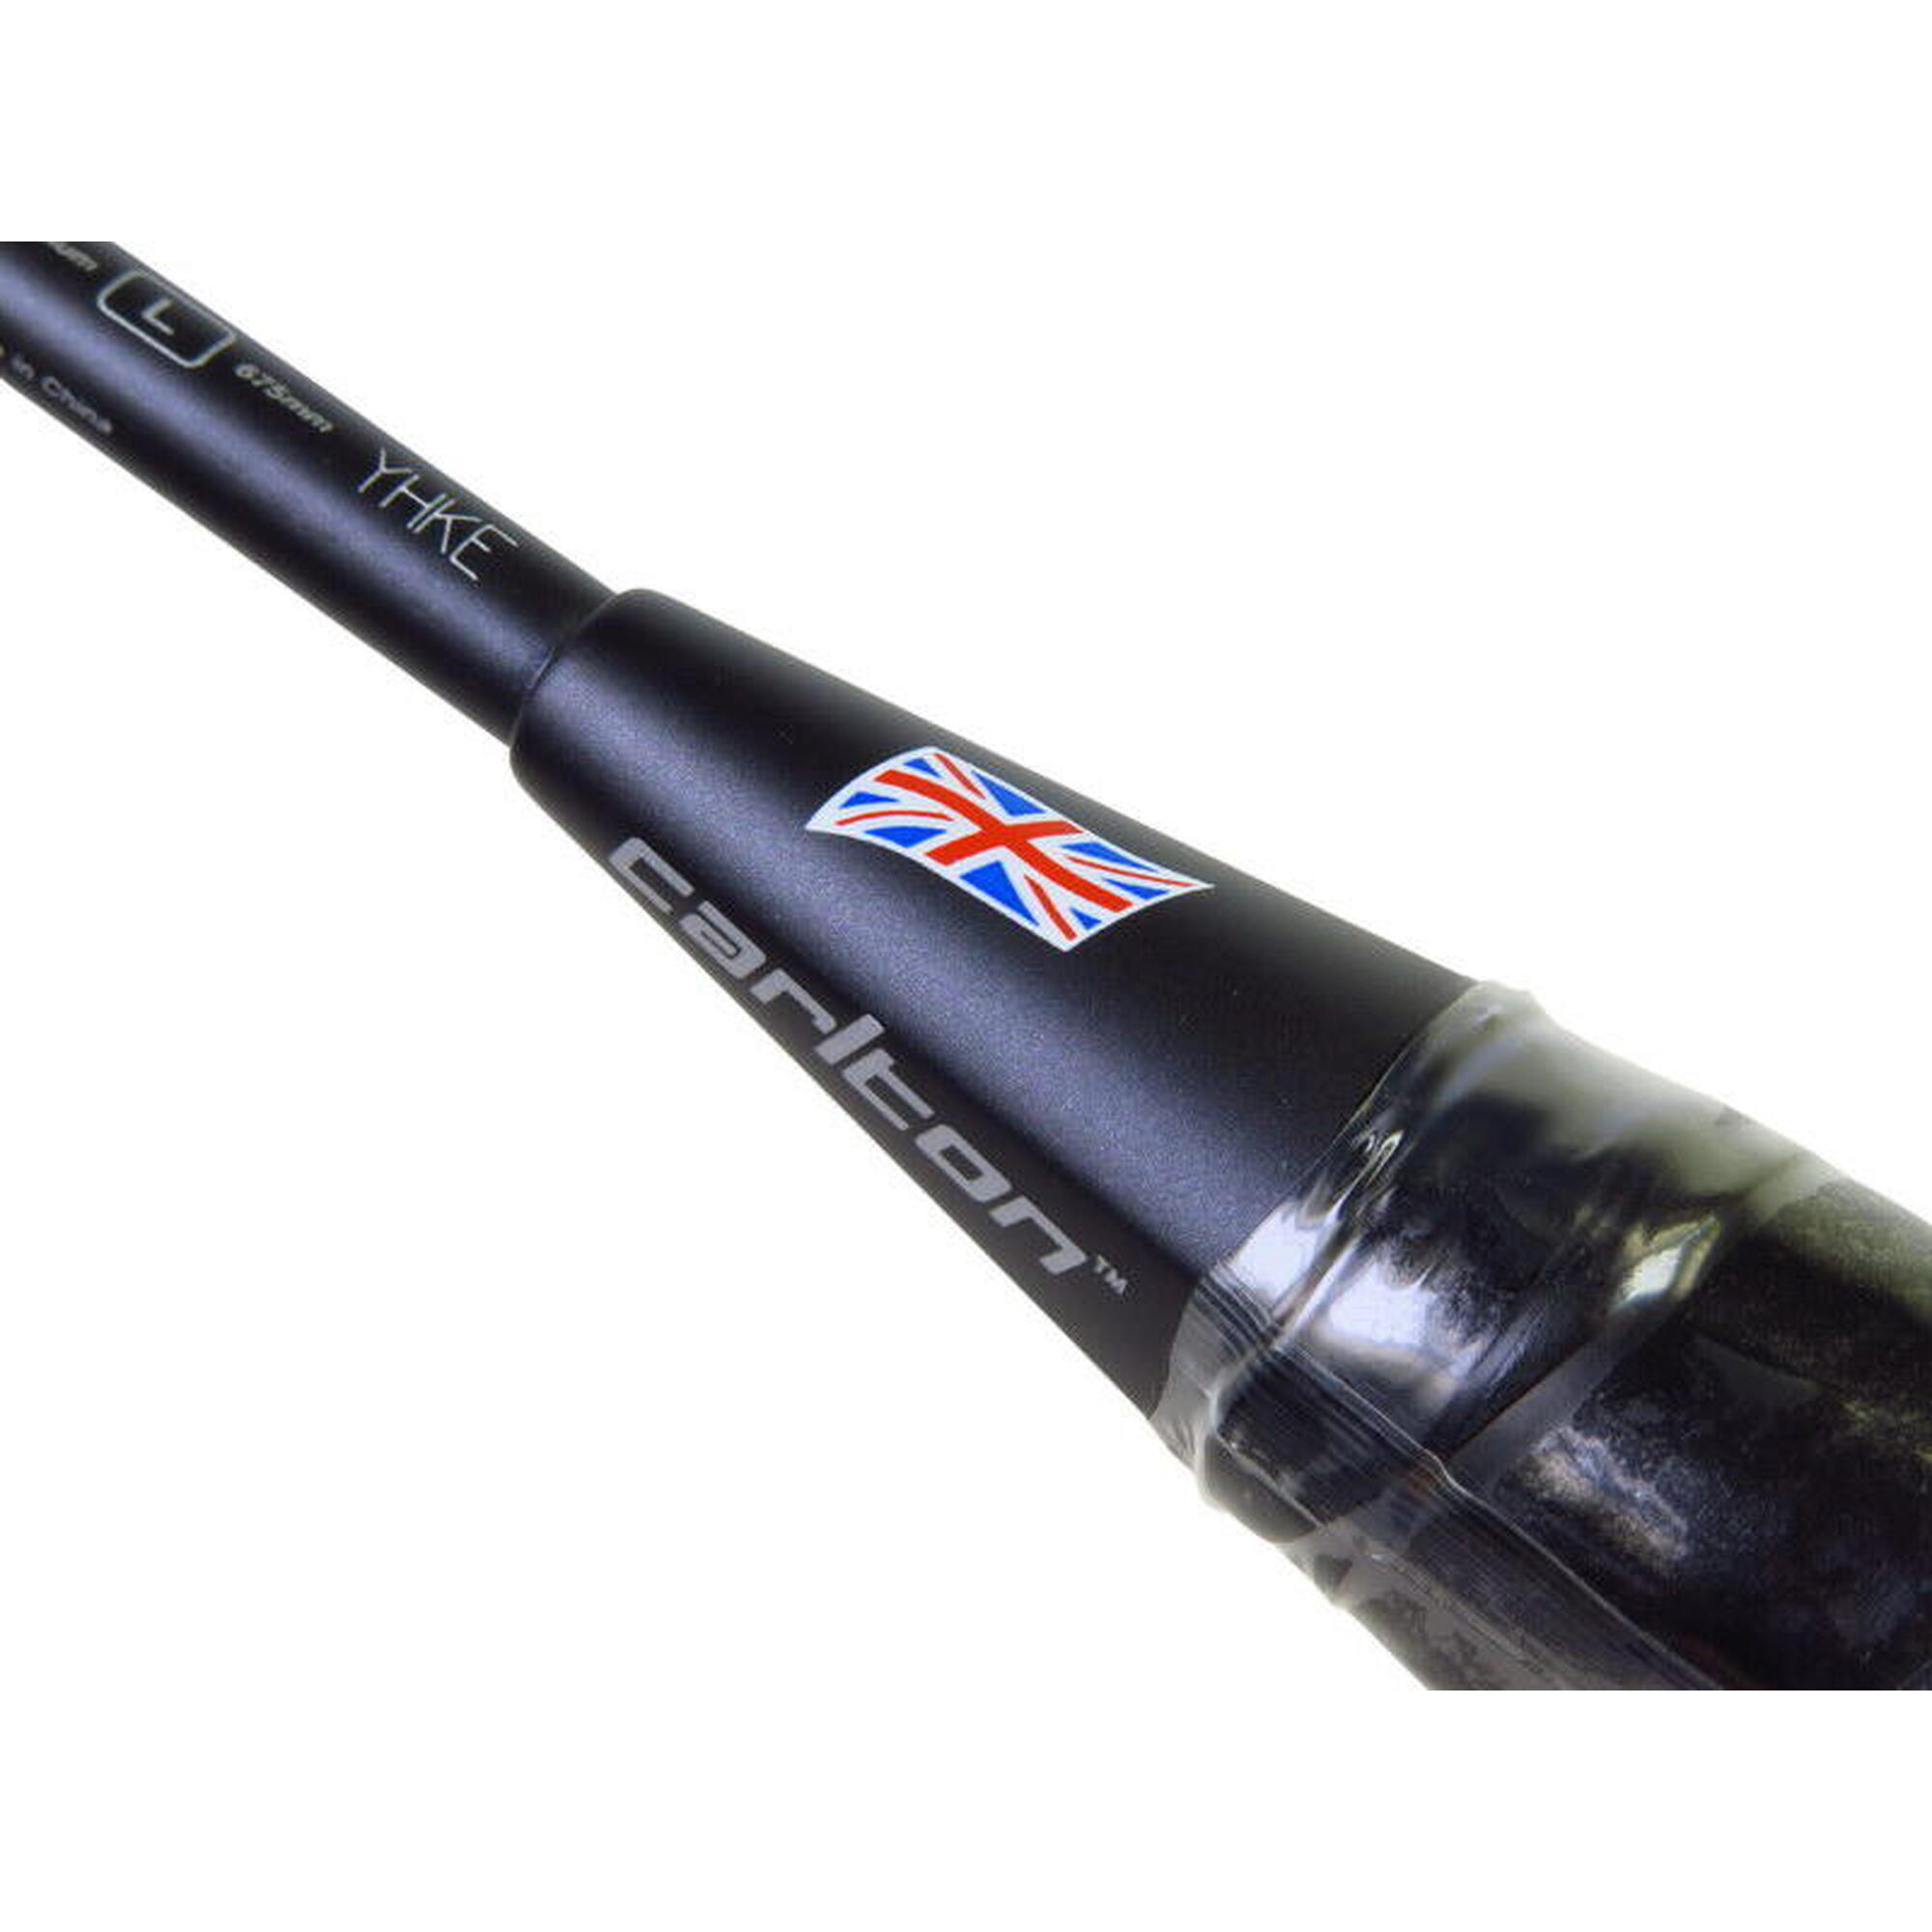 Fireblade 200 G6 HL Badminton Racket (Strung) - BLACK